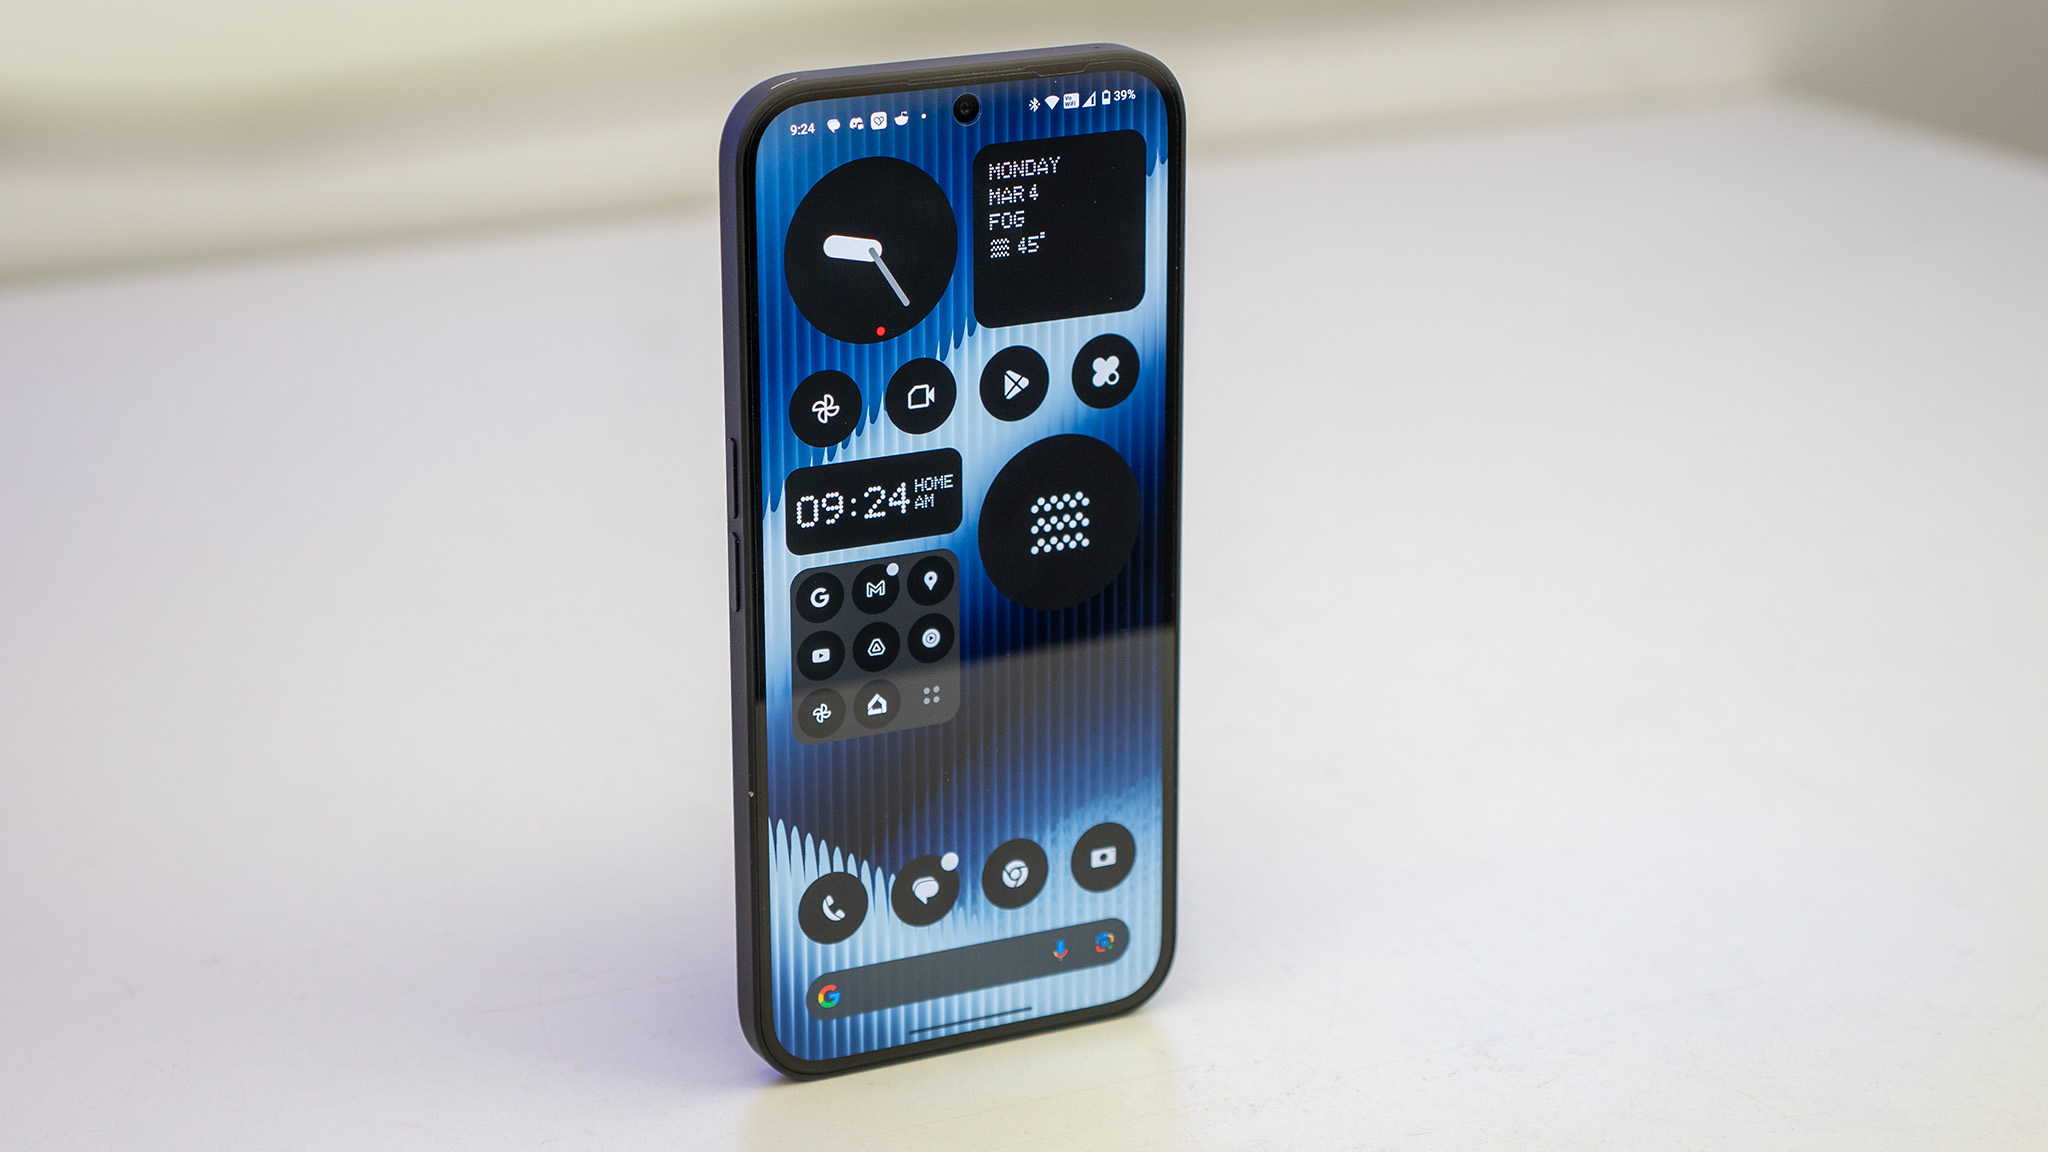 Standart mavi cam arka plana sahip Hiçbir Şey Telefonu (2a)